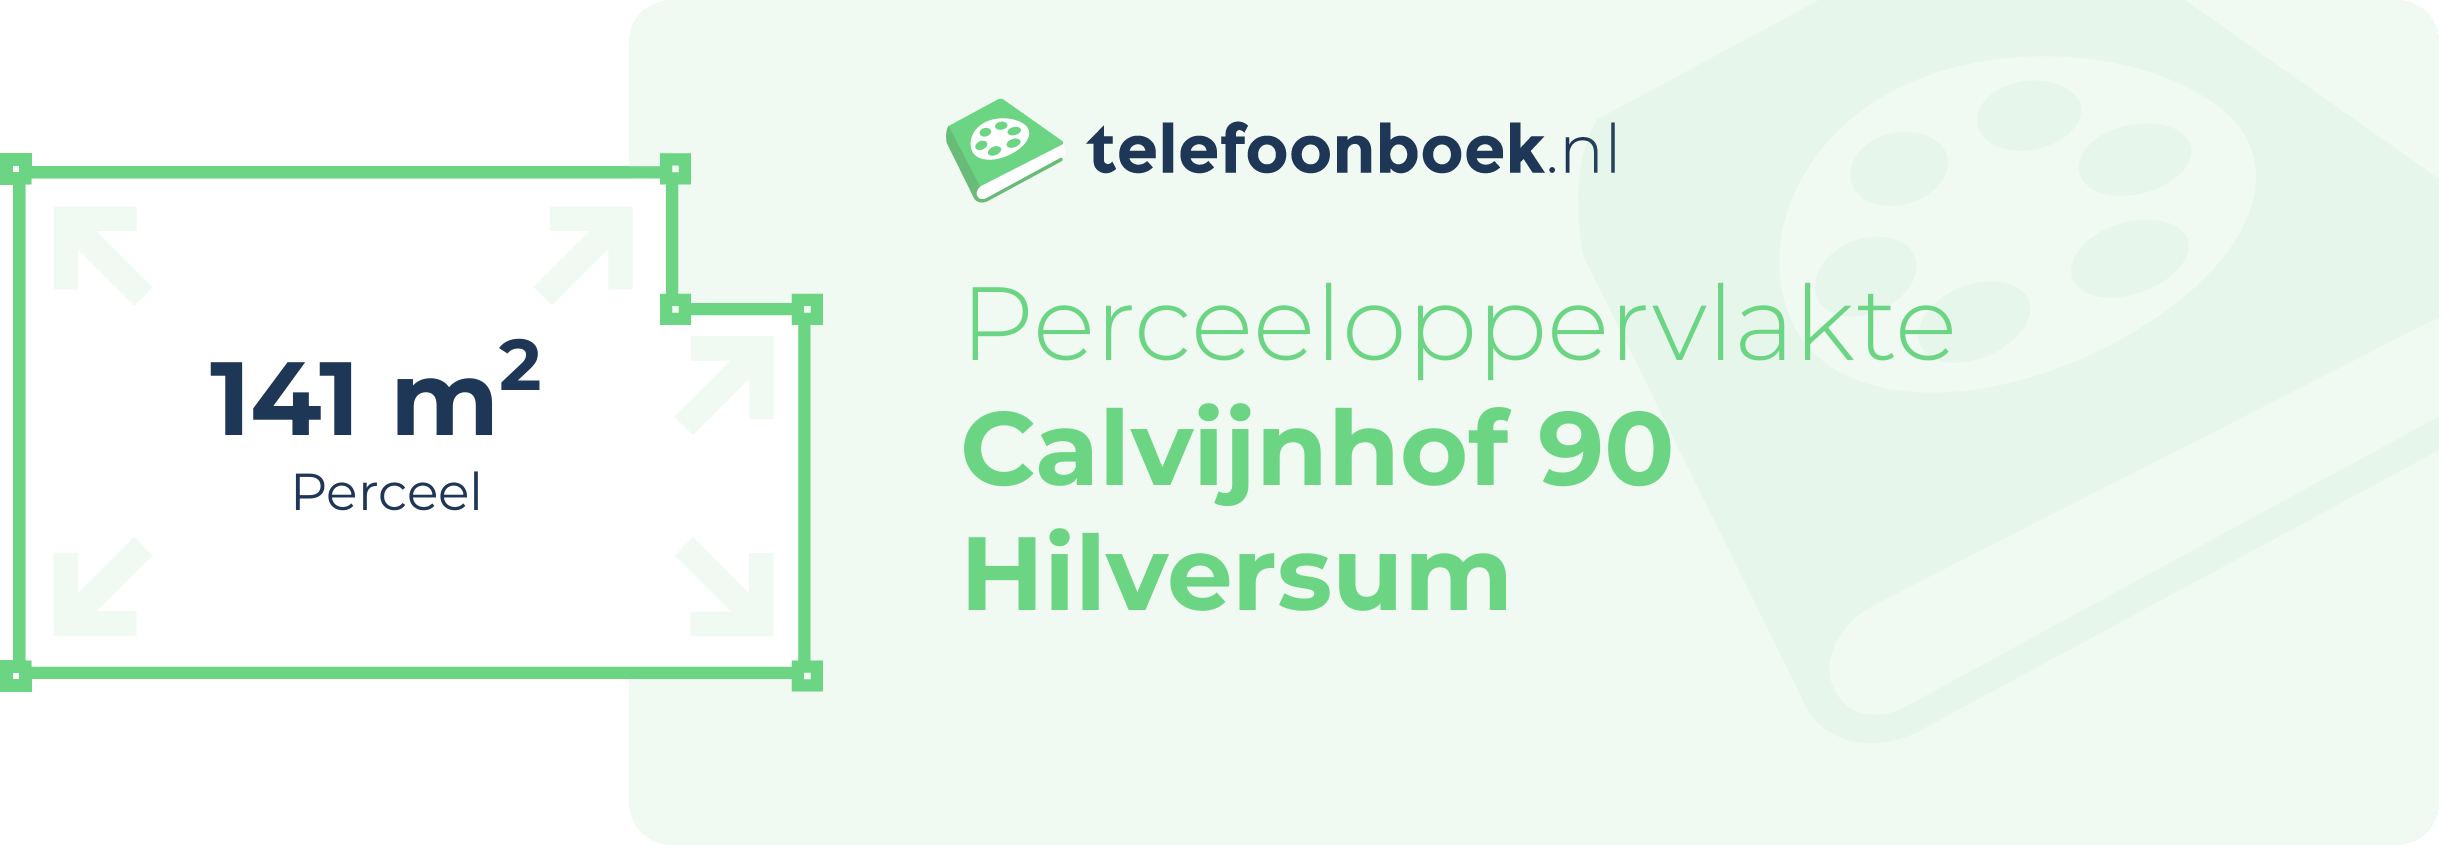 Perceeloppervlakte Calvijnhof 90 Hilversum